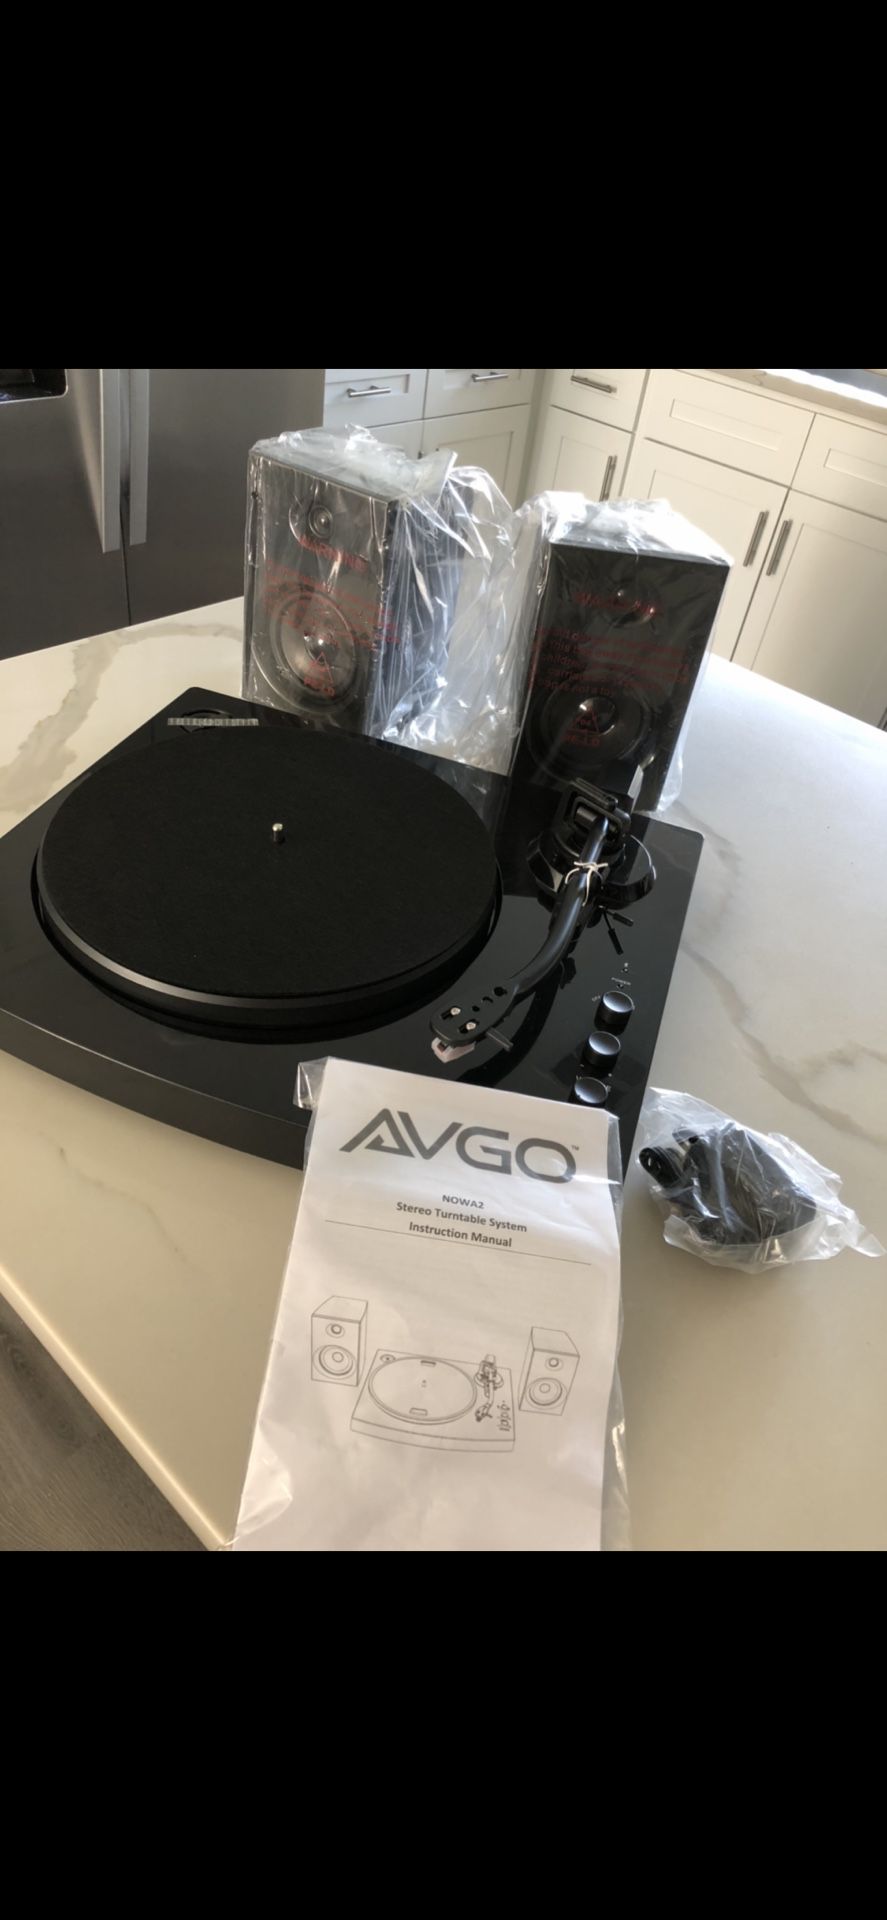 New Stereo turntable system AVGO